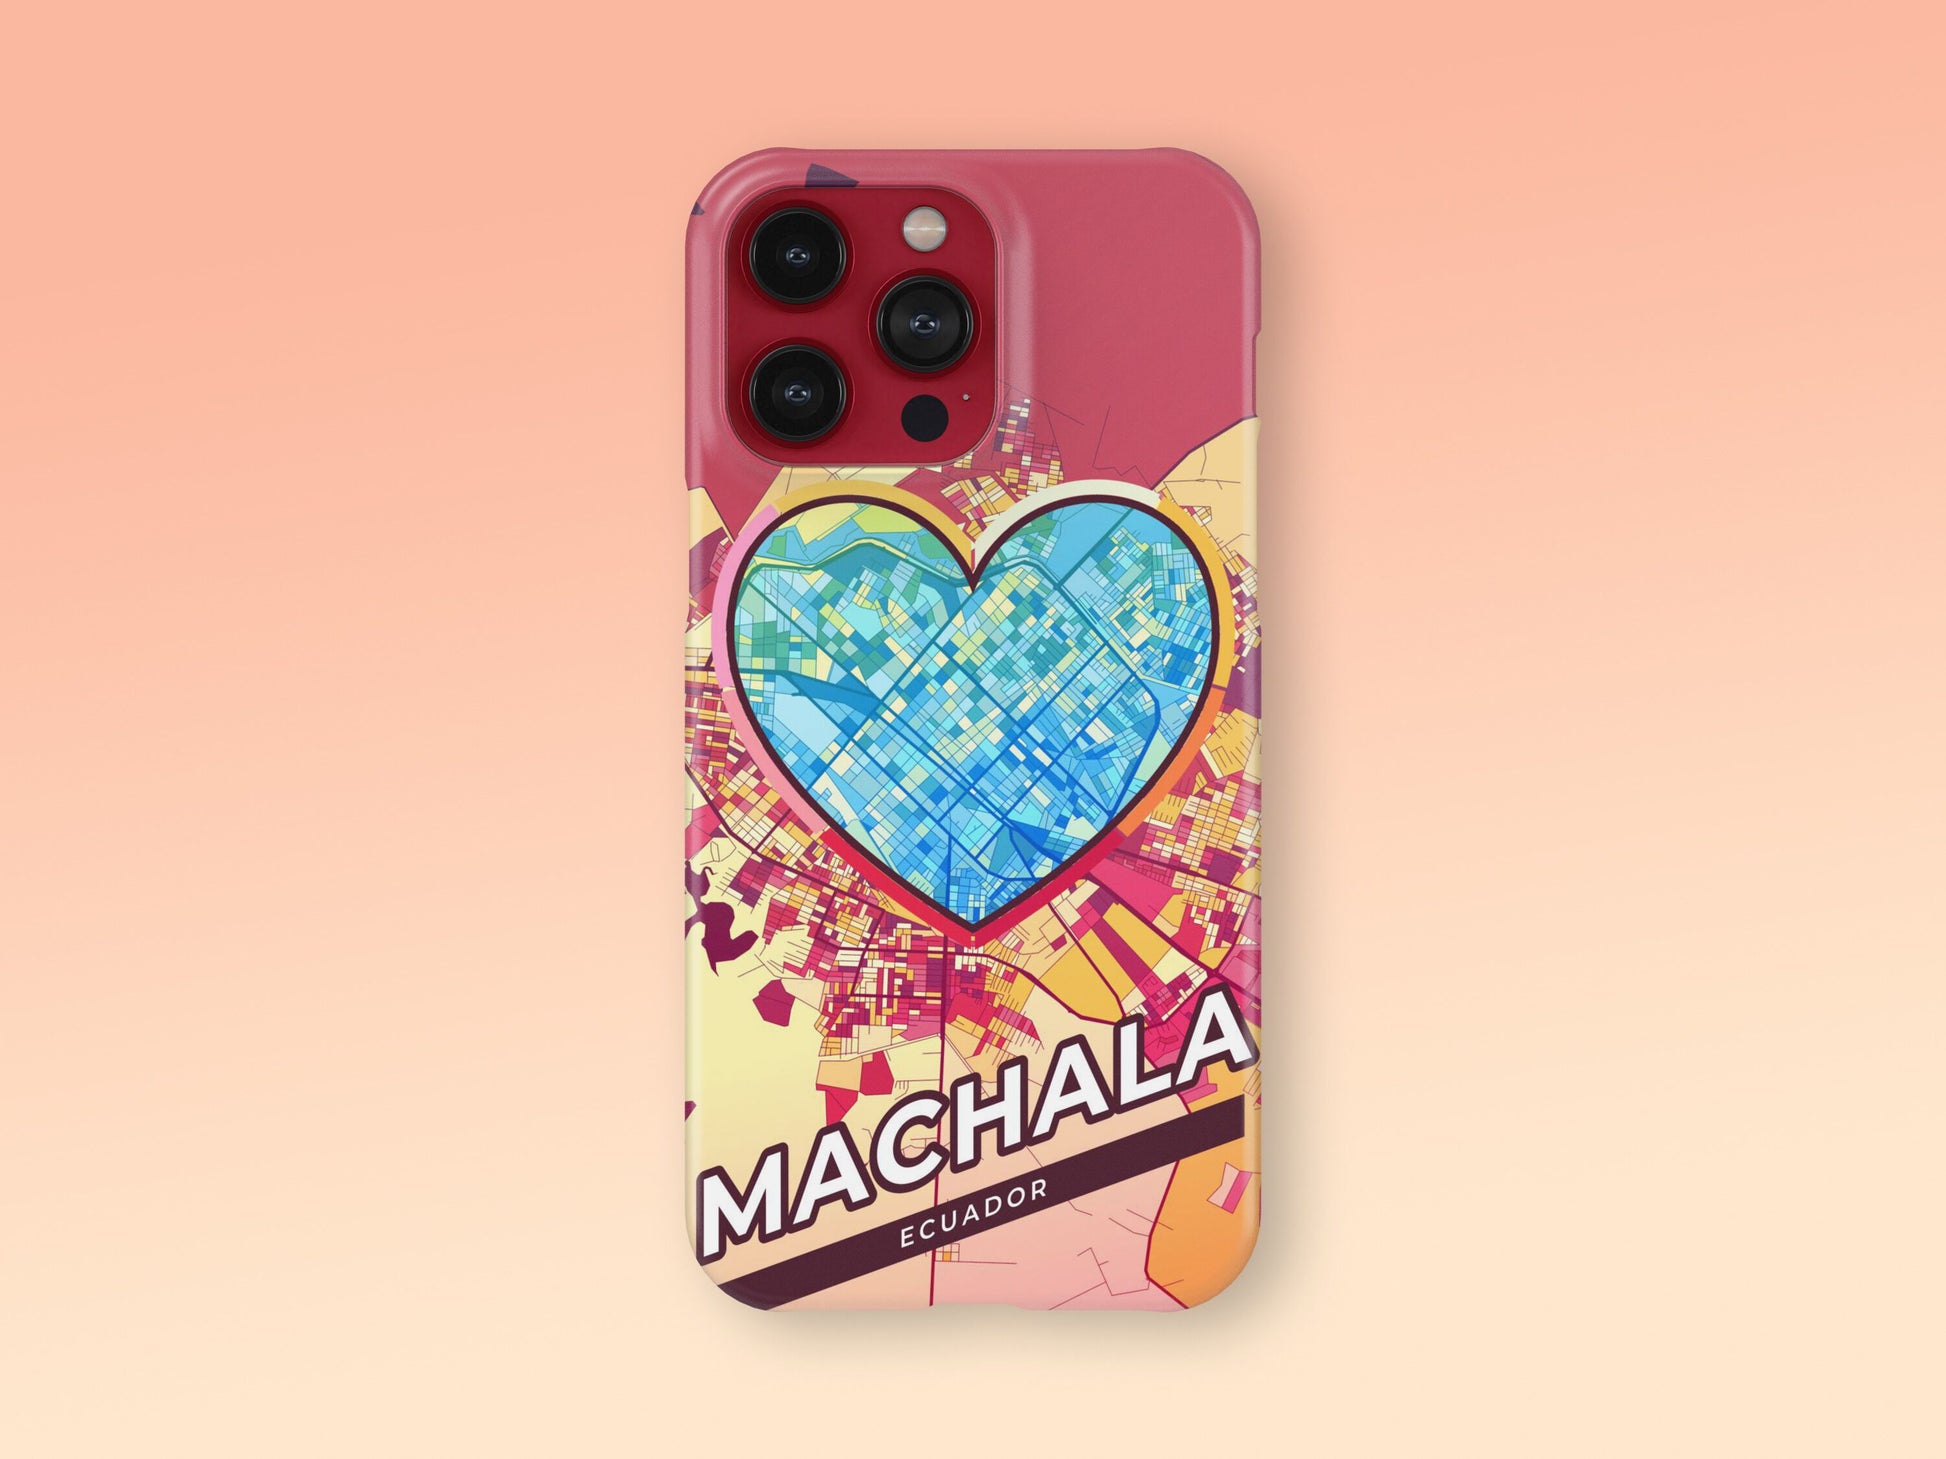 Machala Ecuador slim phone case with colorful icon. Birthday, wedding or housewarming gift. Couple match cases. 2